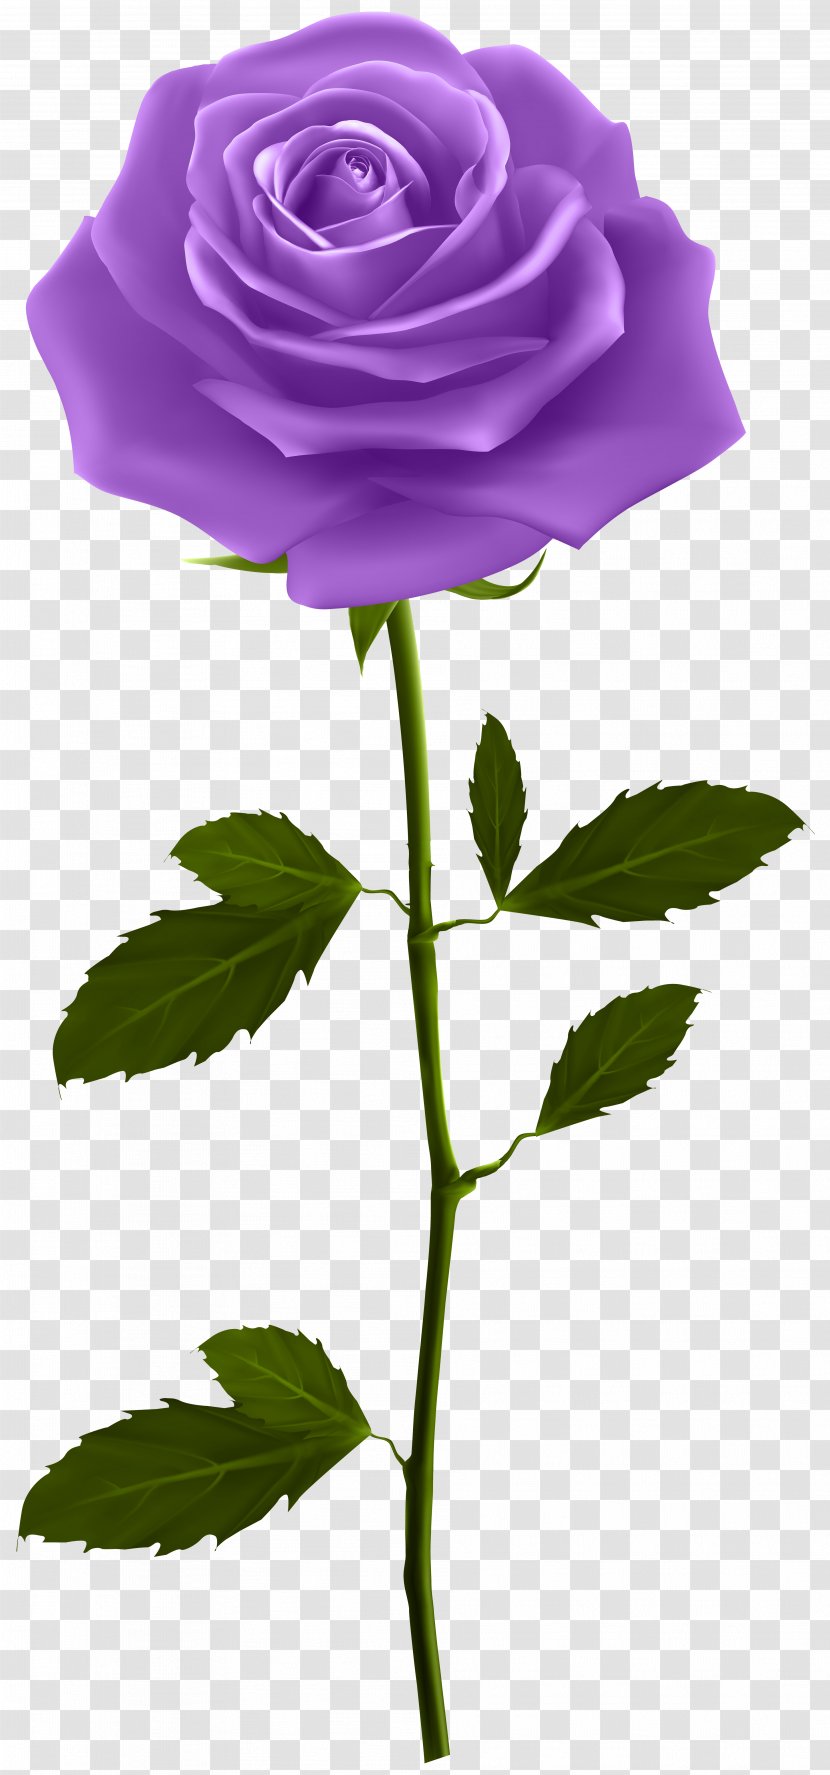 Rose Clip Art - Flower - Purple With Stem Image Transparent PNG